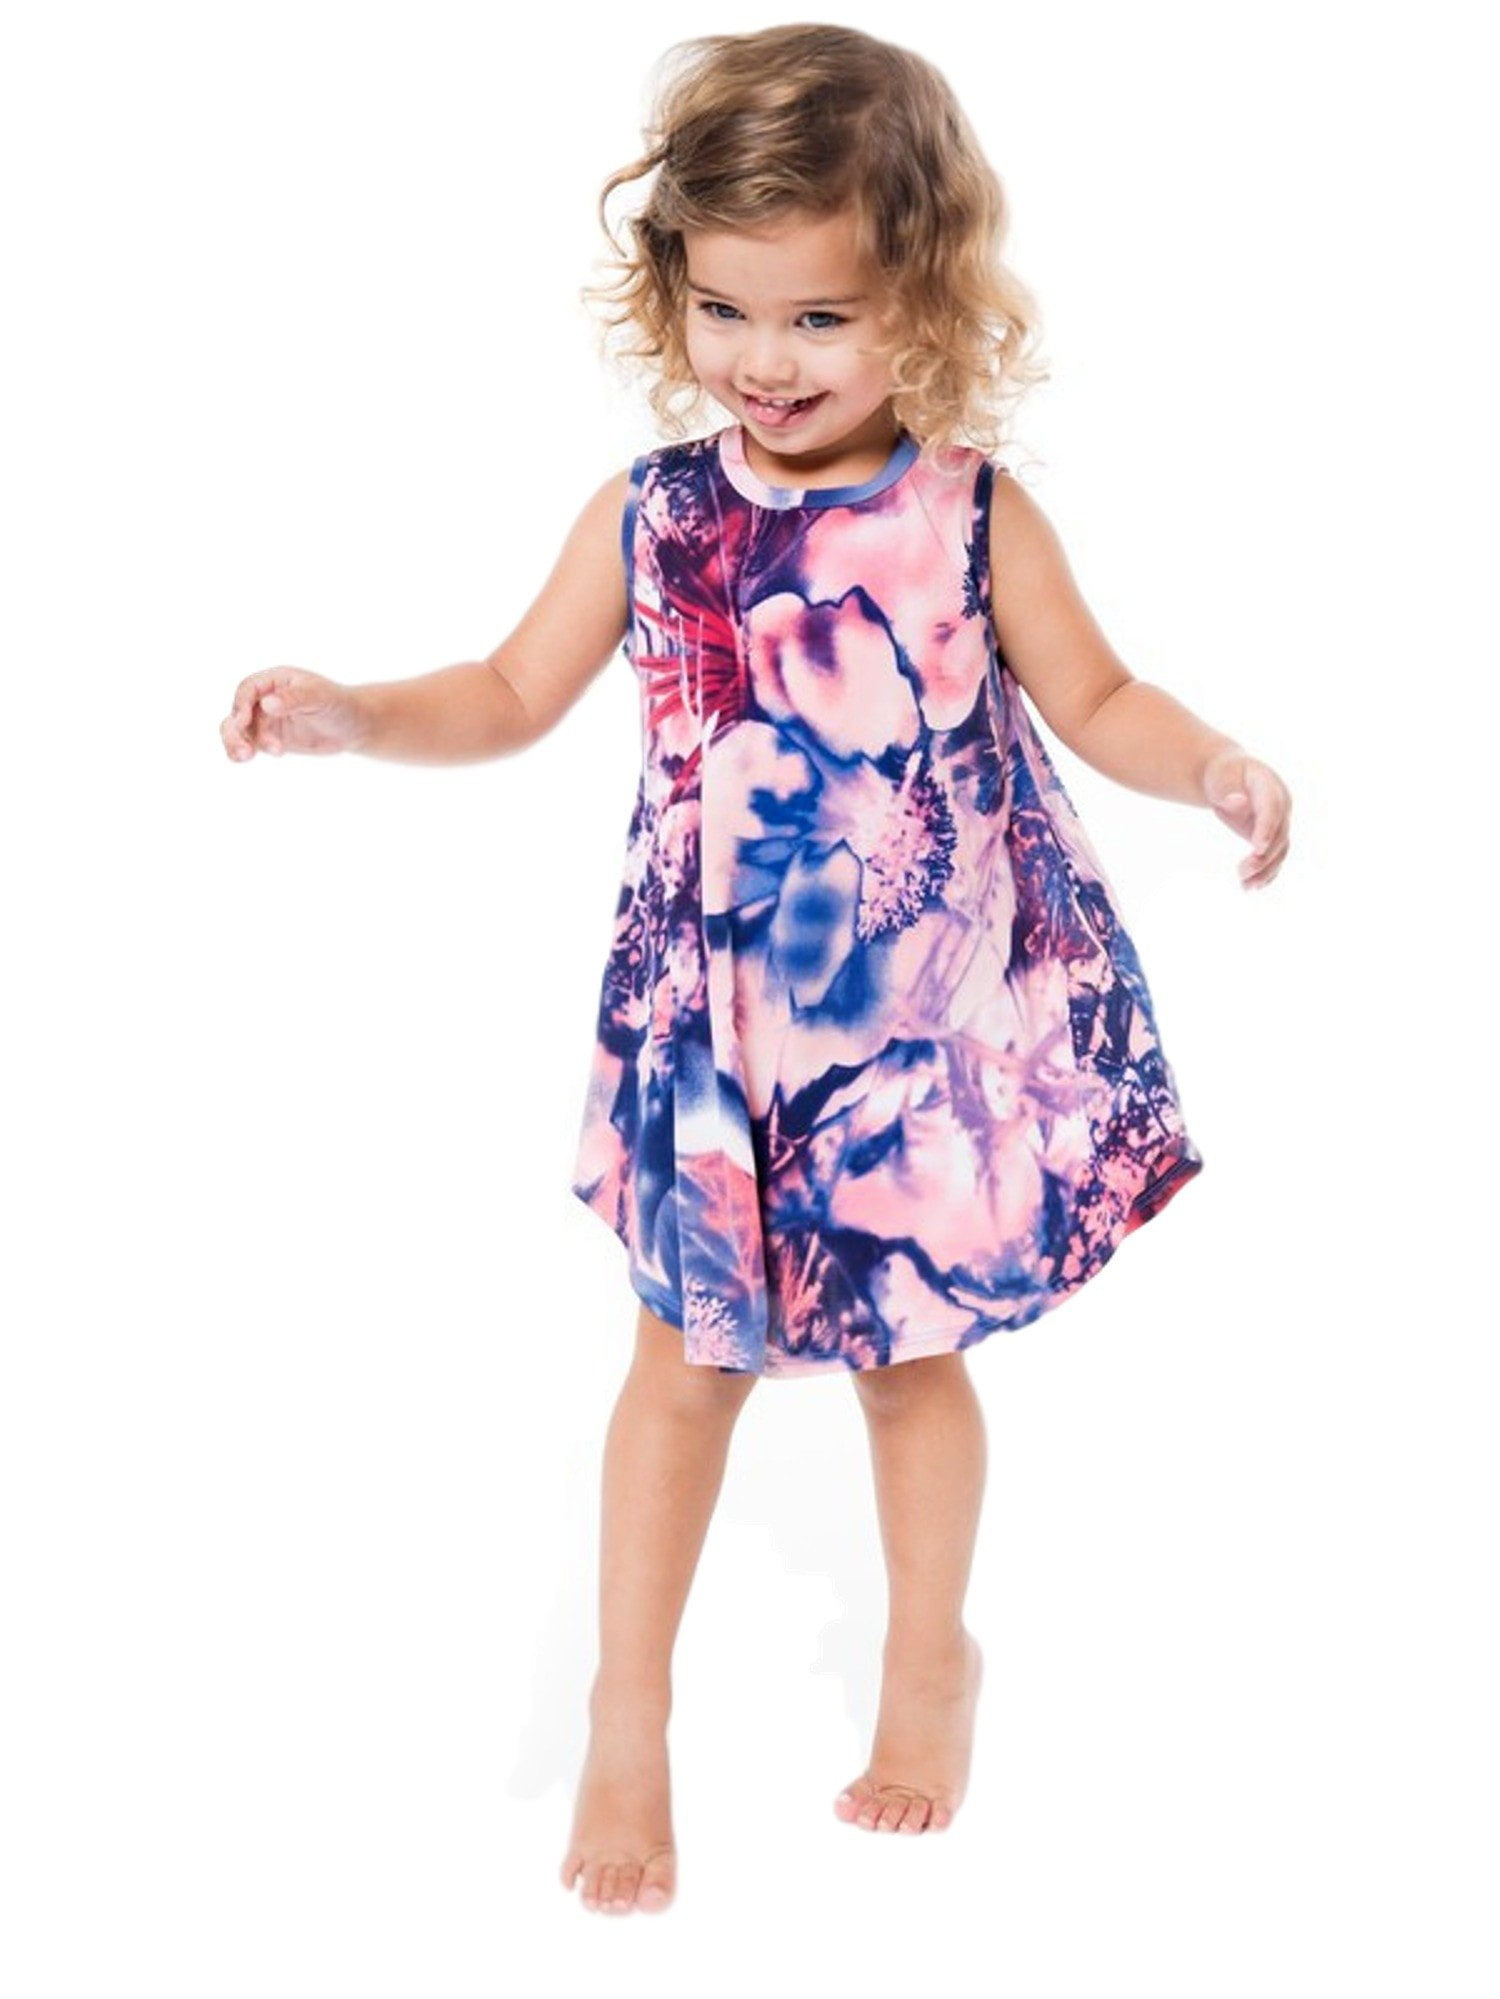 Toddler Floral Printed Dress, Pink - Walmart.com